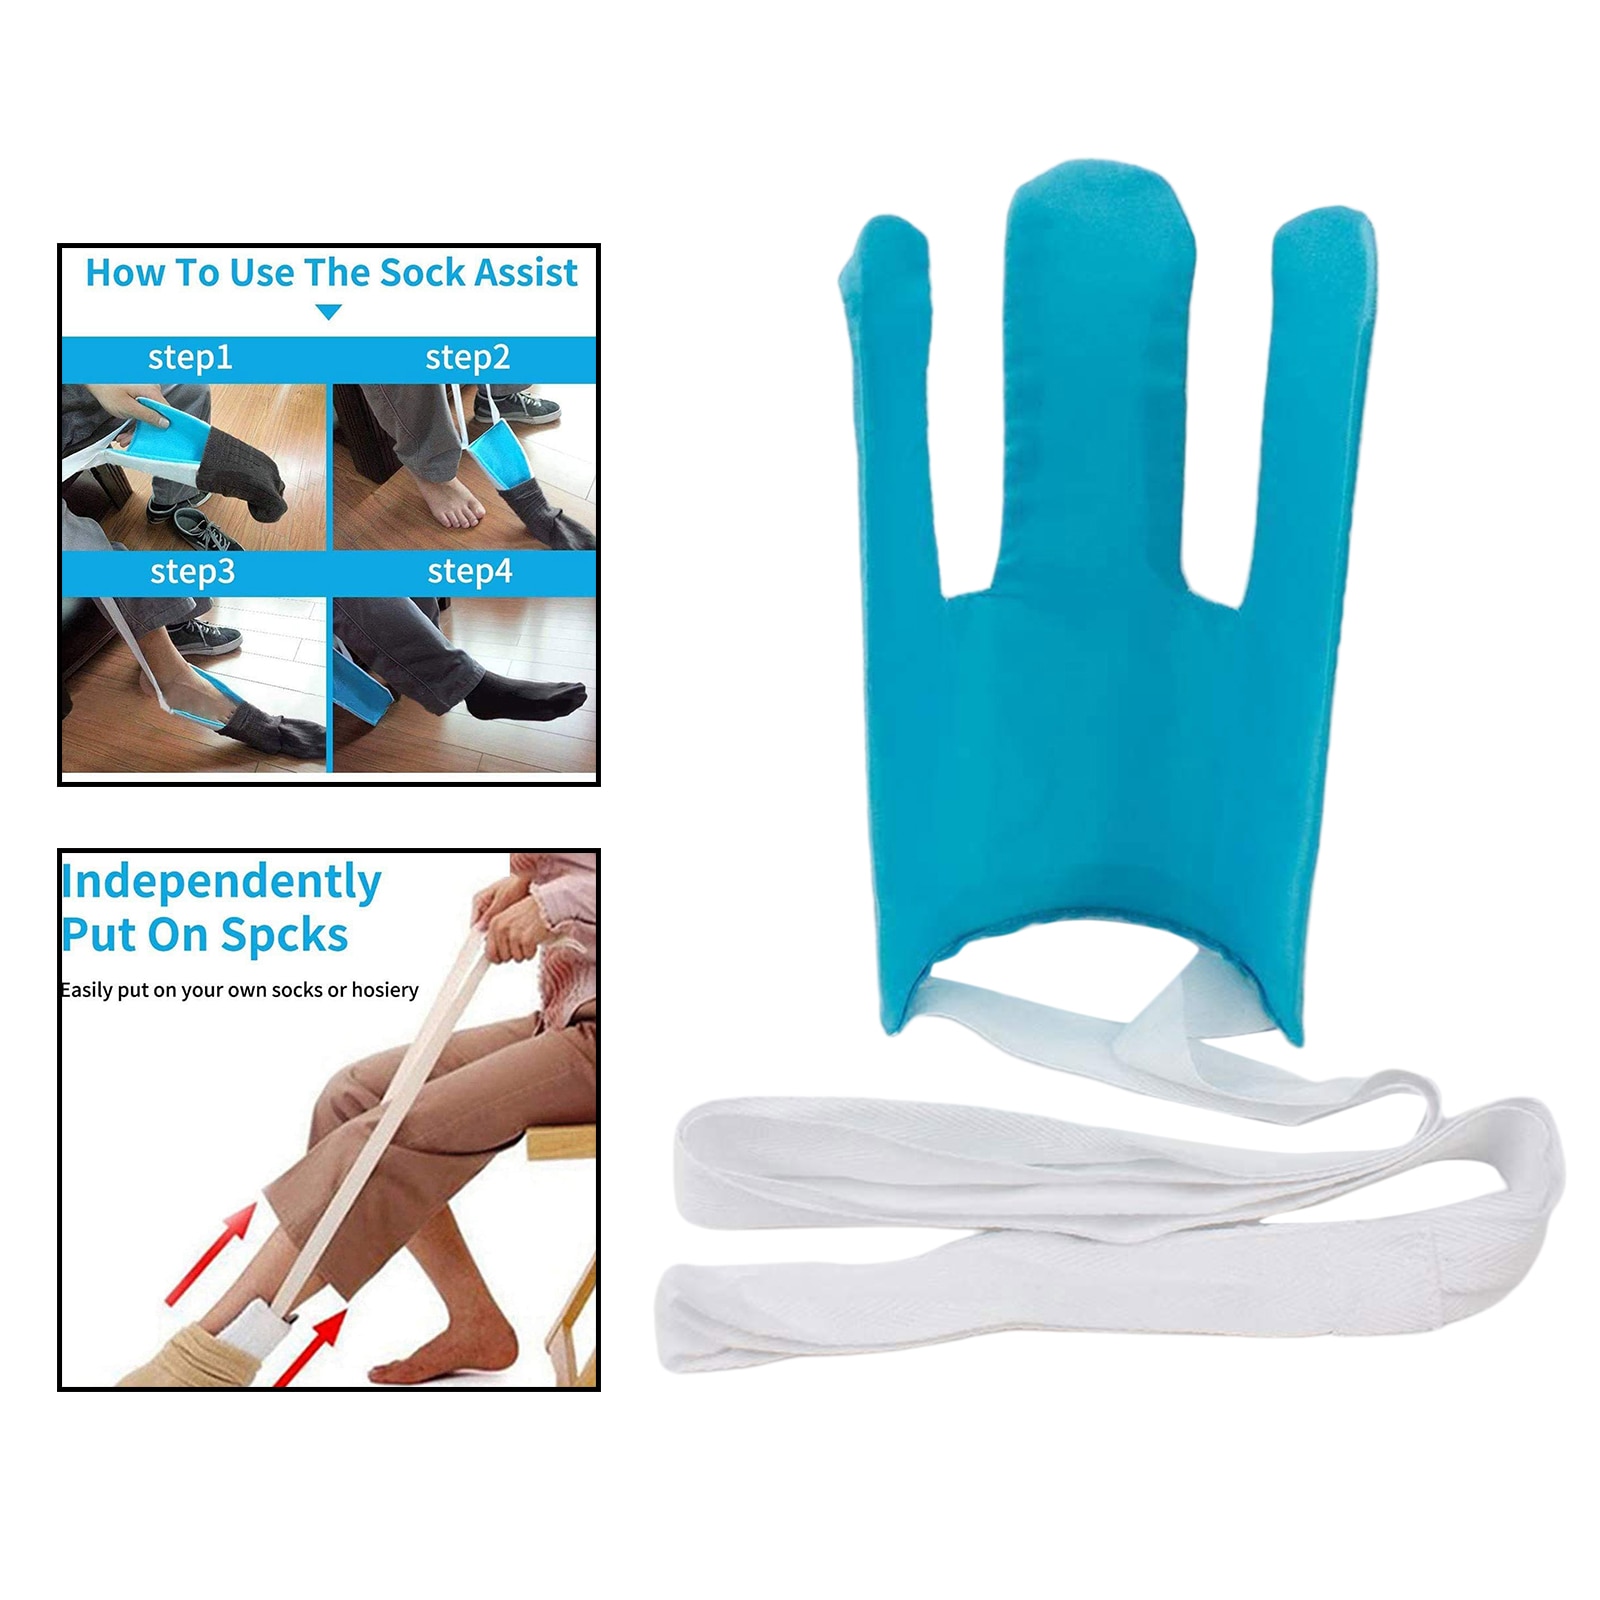 Flexibele Sok Aid Kit Slider Sok Helper Aide Tool Voor Putting Op Sokken Mannen Vrouwen Ouderen Sok Aid Sok Helper